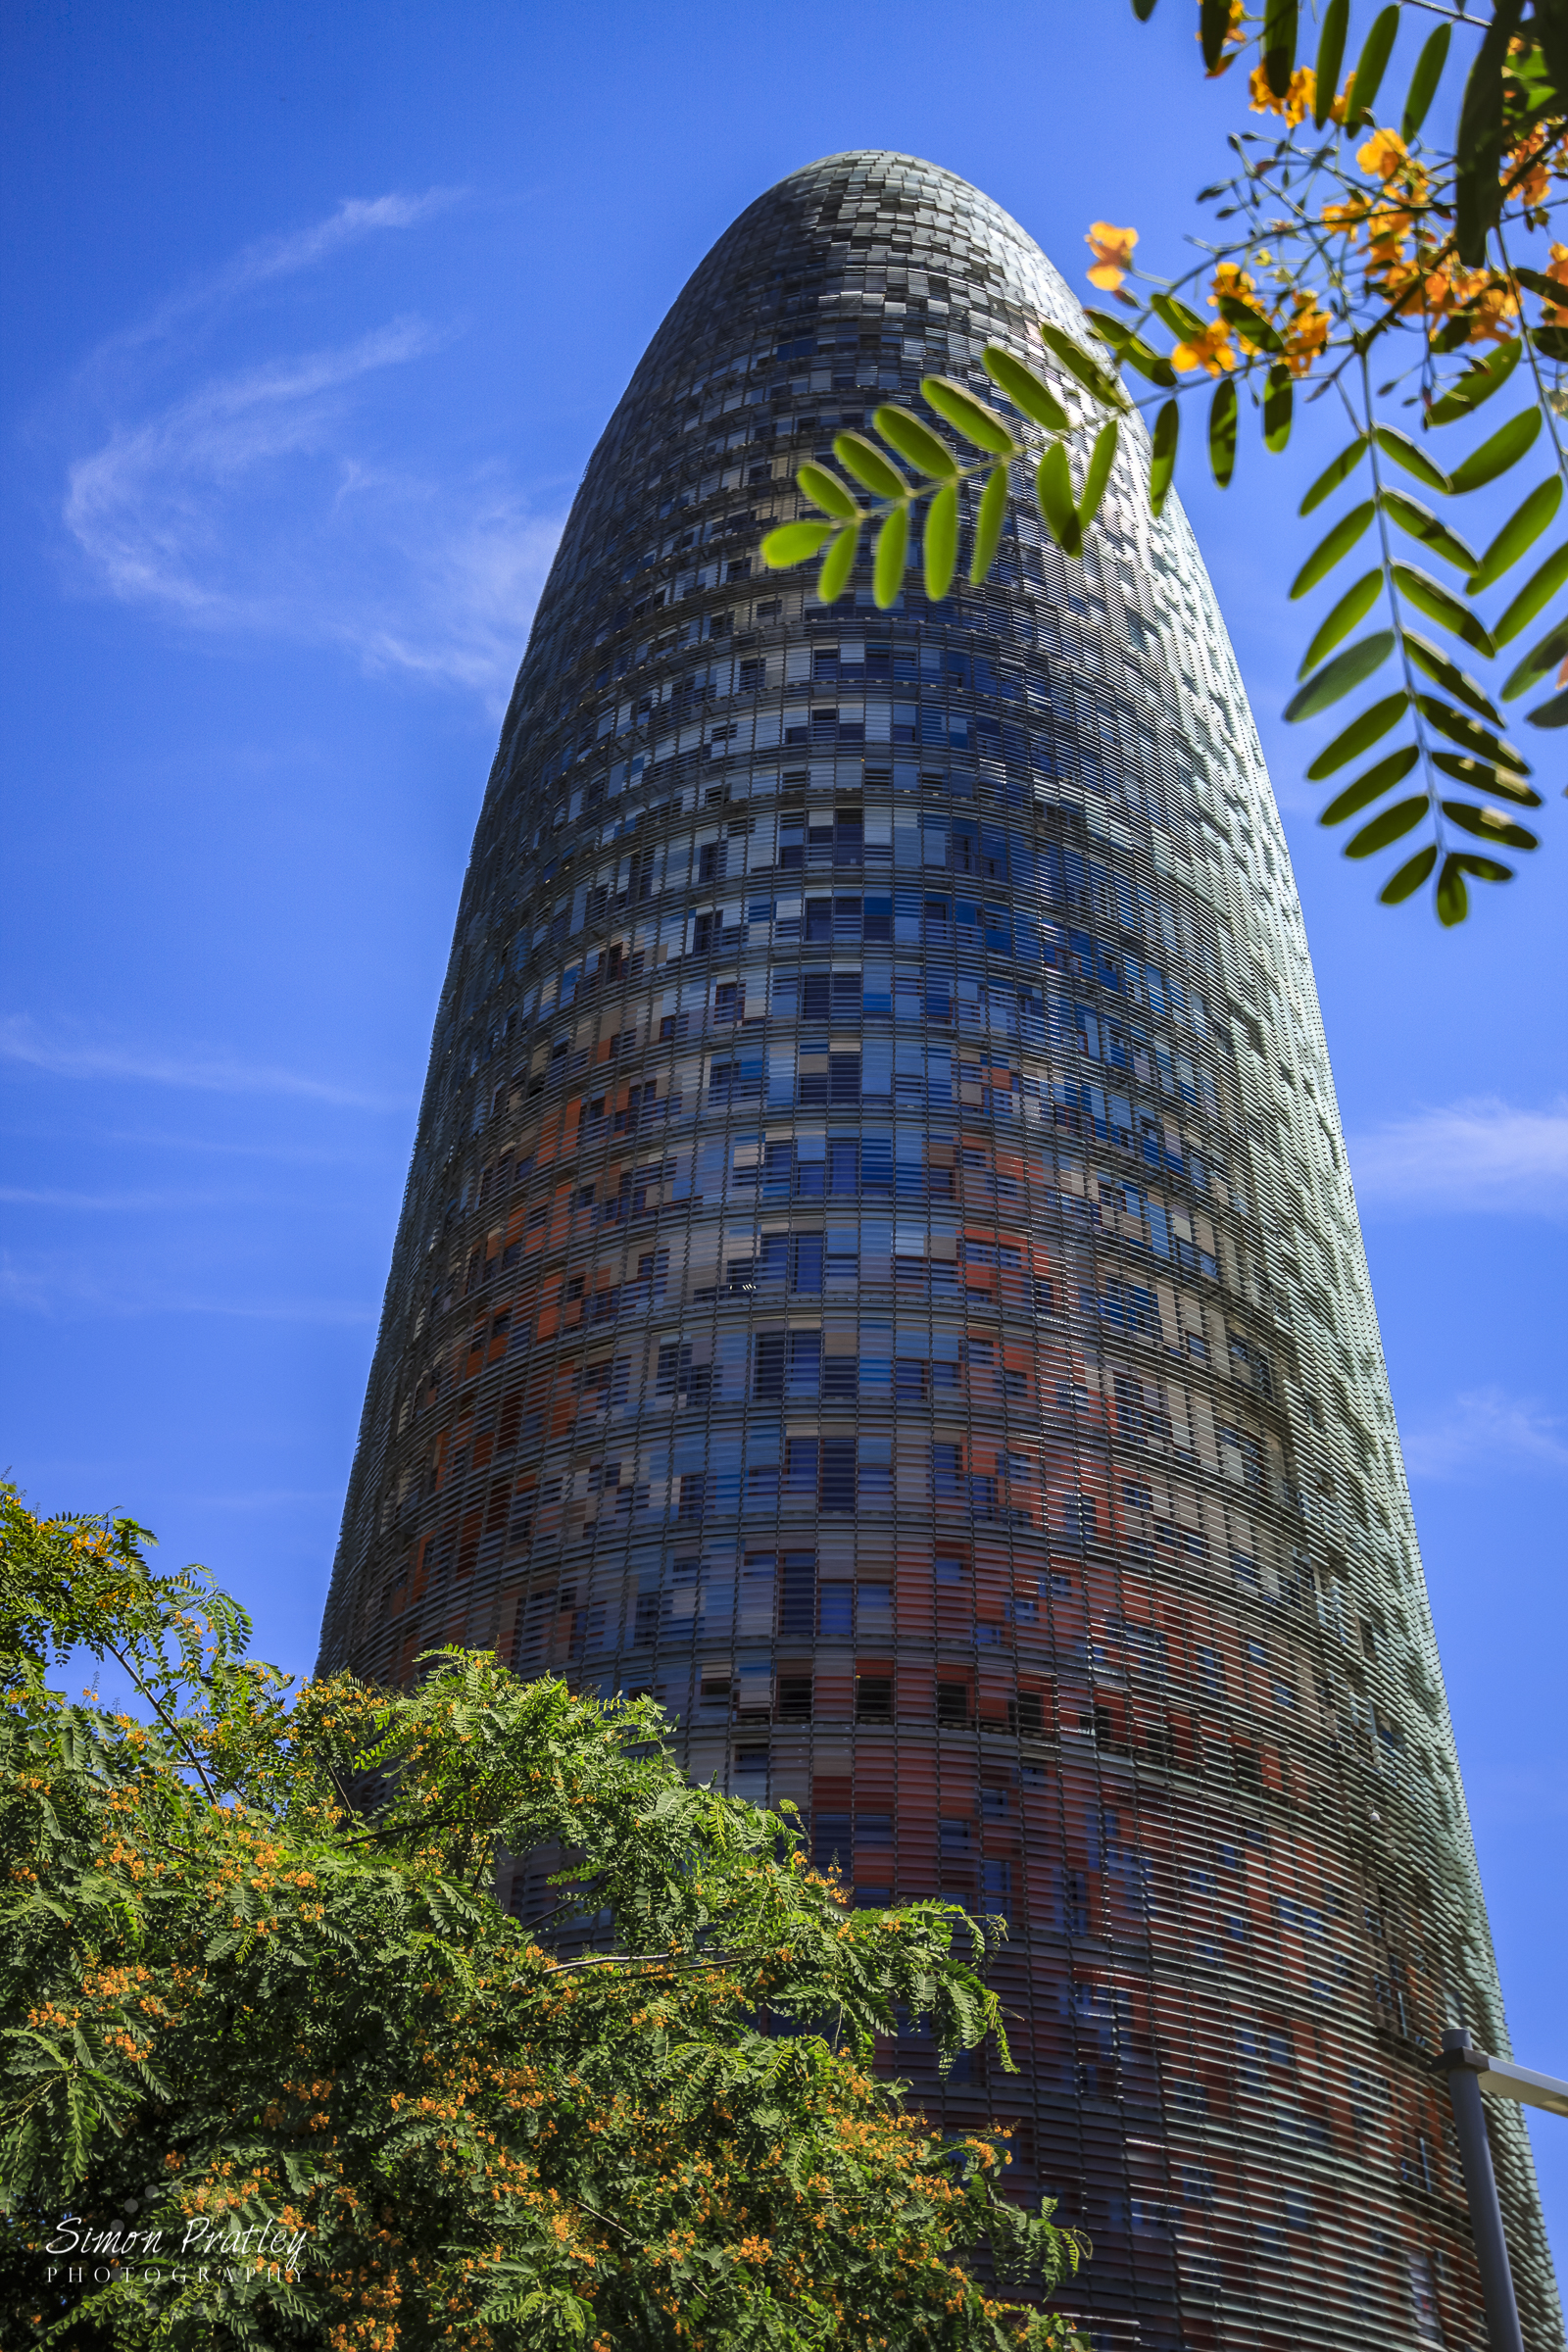 La Torre Abgar de Barcelona